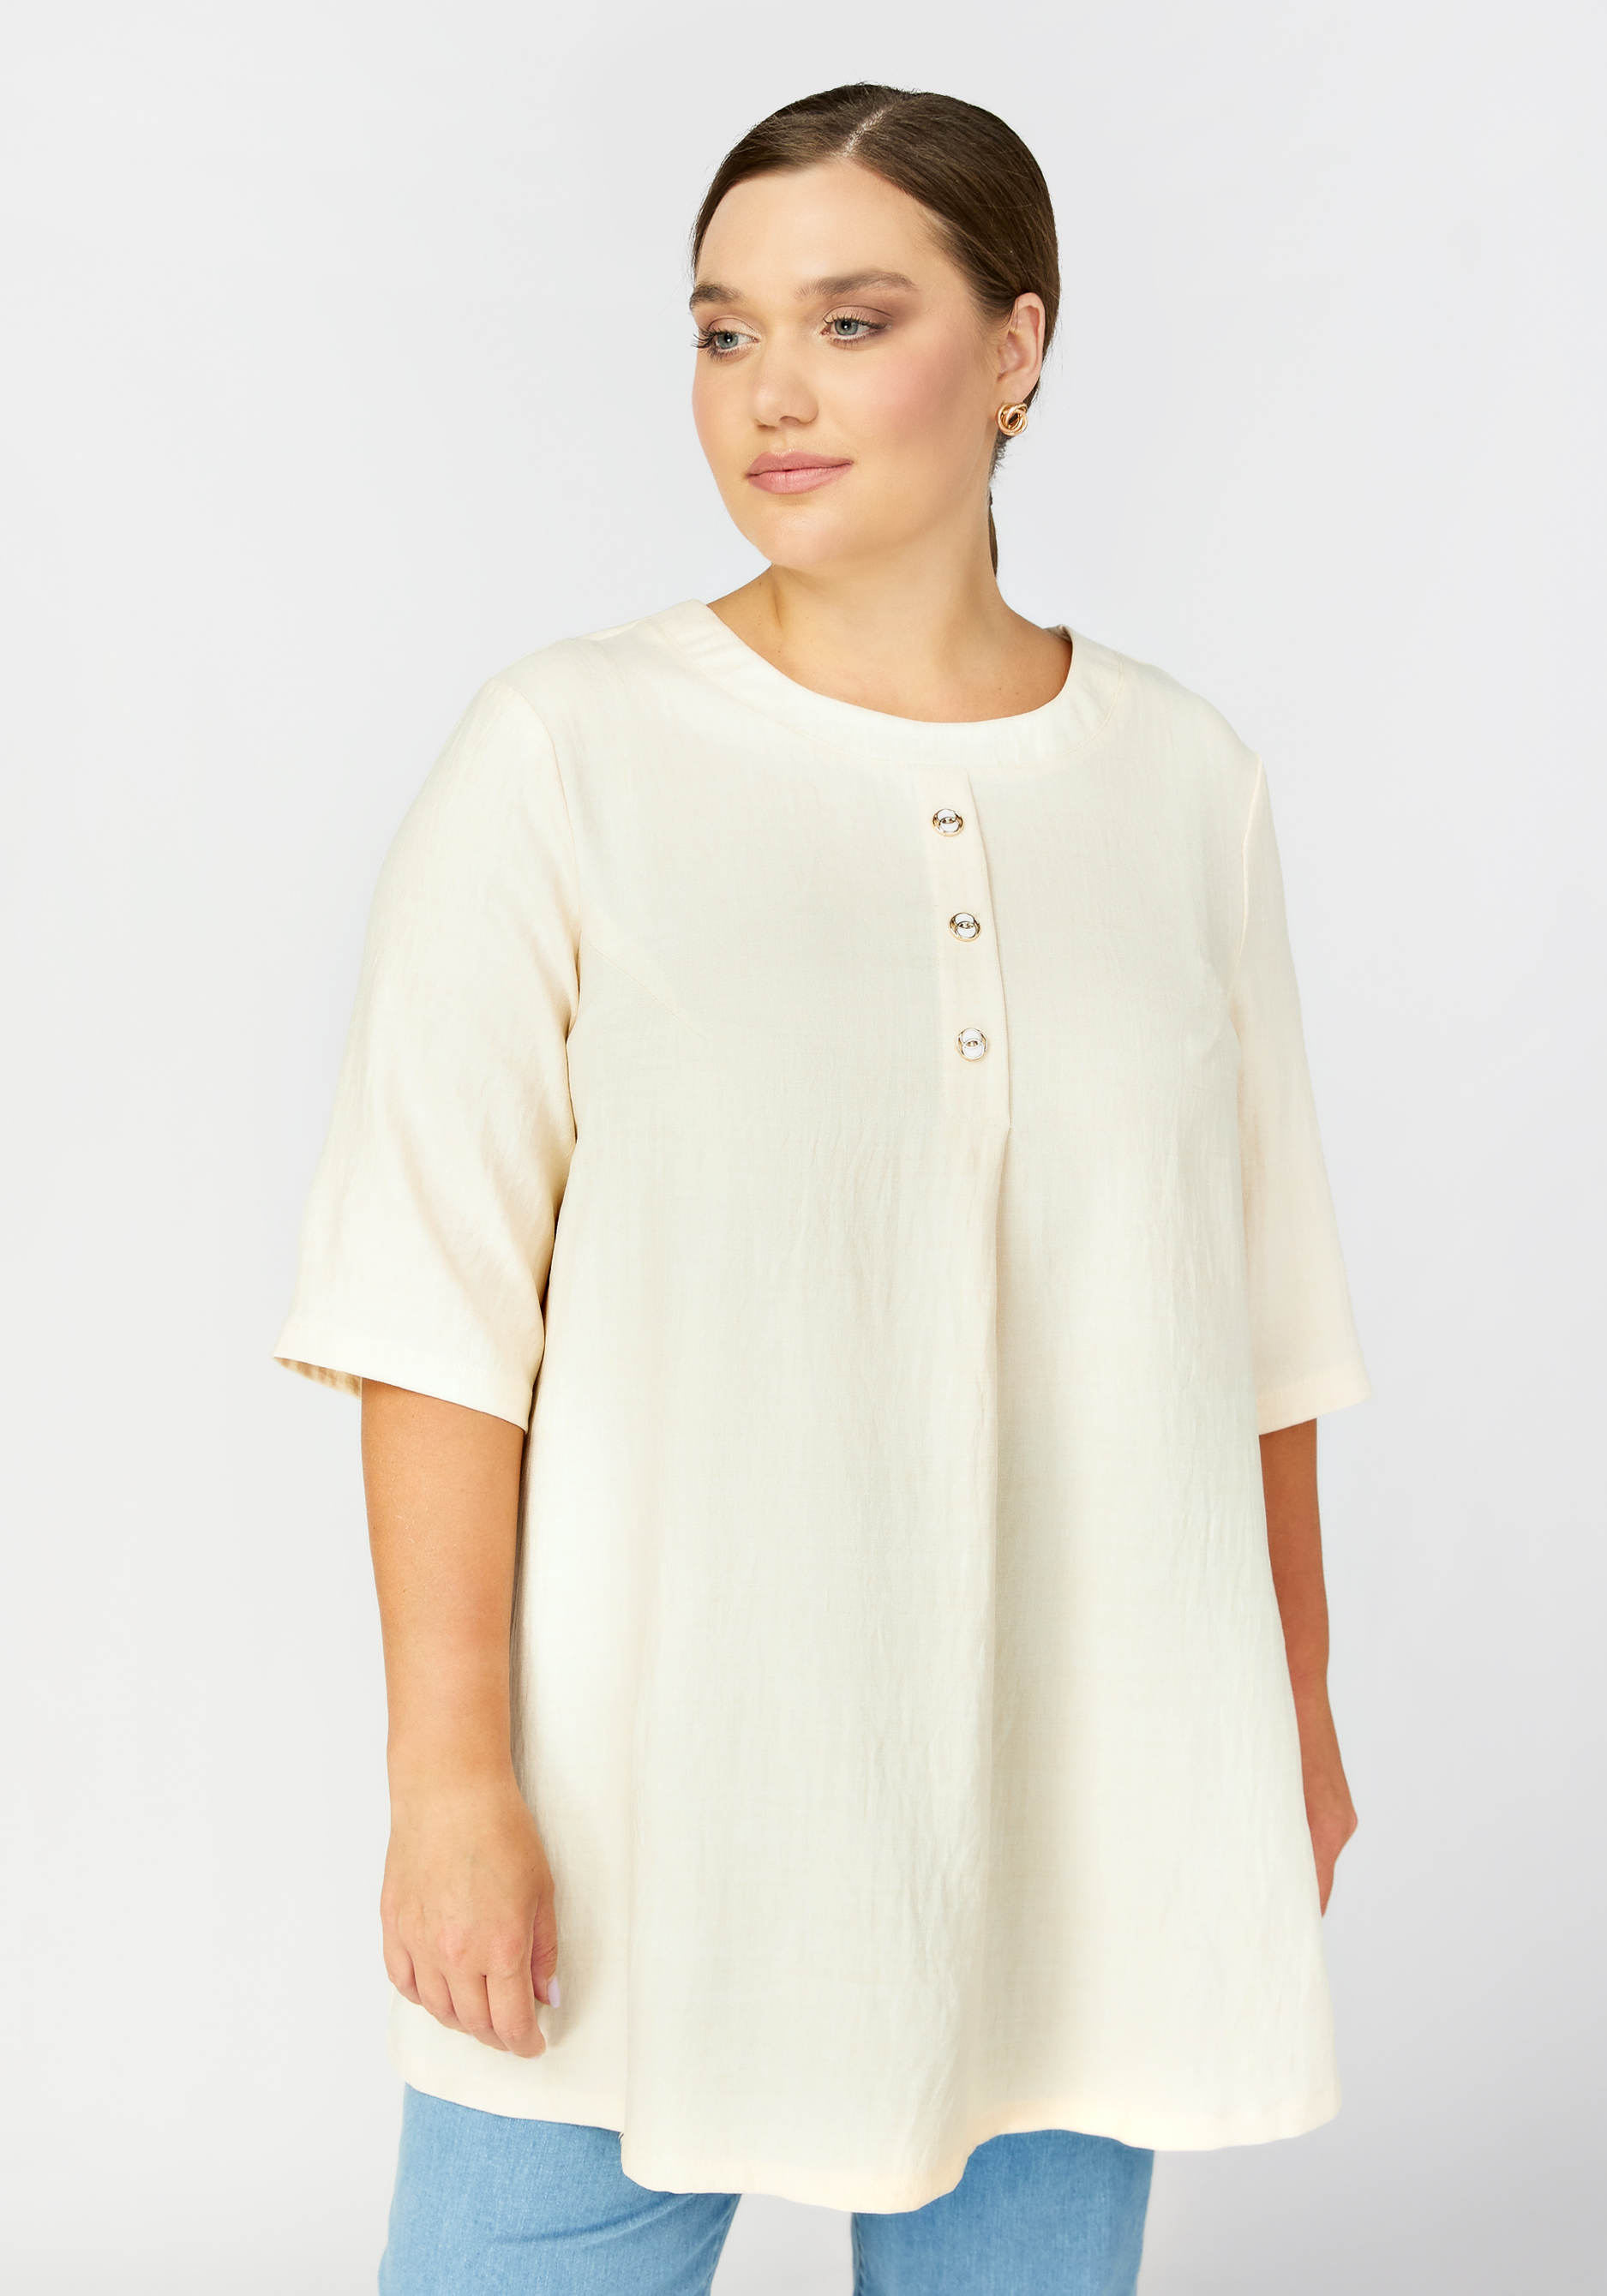 Блуза с планкой на пуговицах жен блуза арт 16 0316 белый р 46